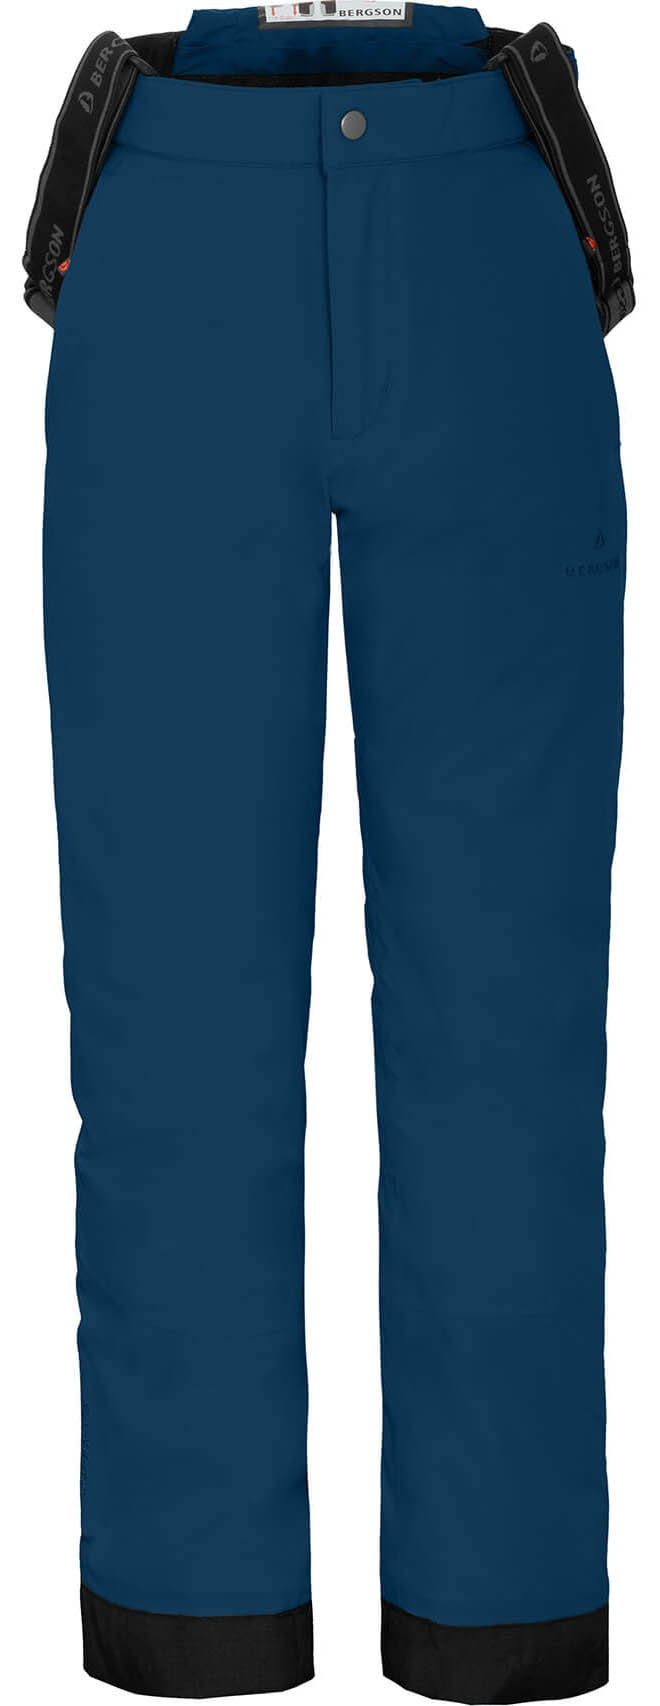 Bergson Skihose PELLY MAXI 20000 mm Wassersäule, Kinder blau wattiert, Skihose, Normalgrößen, poseidon